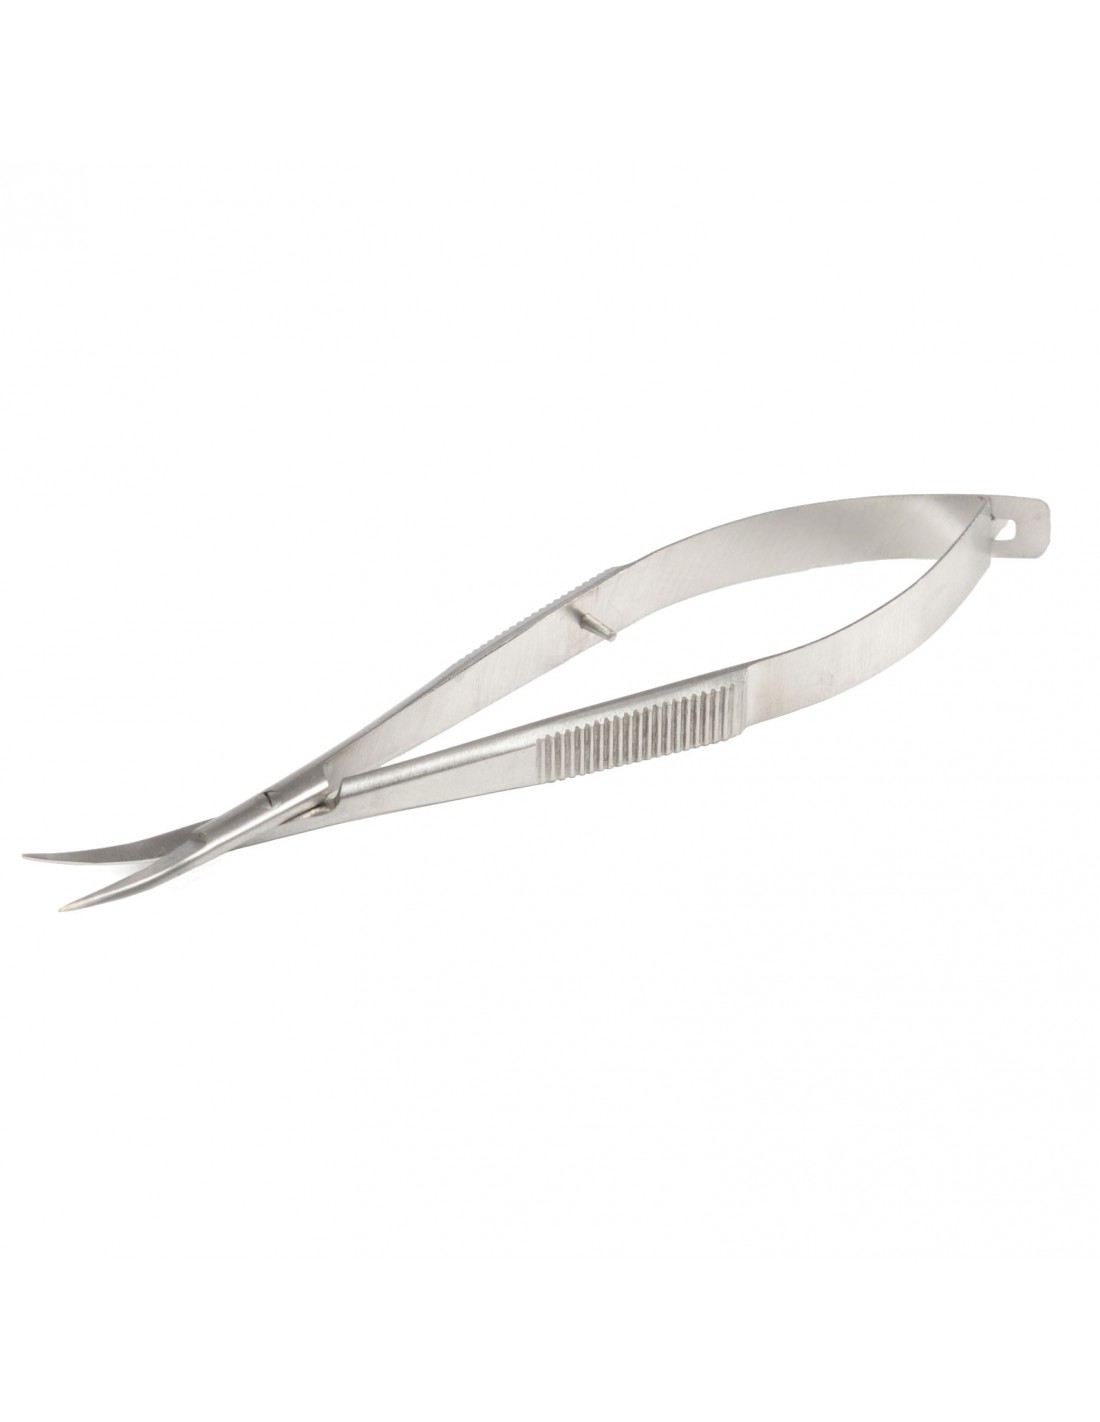 Spring scissors - Tools for modeling - Amati Model